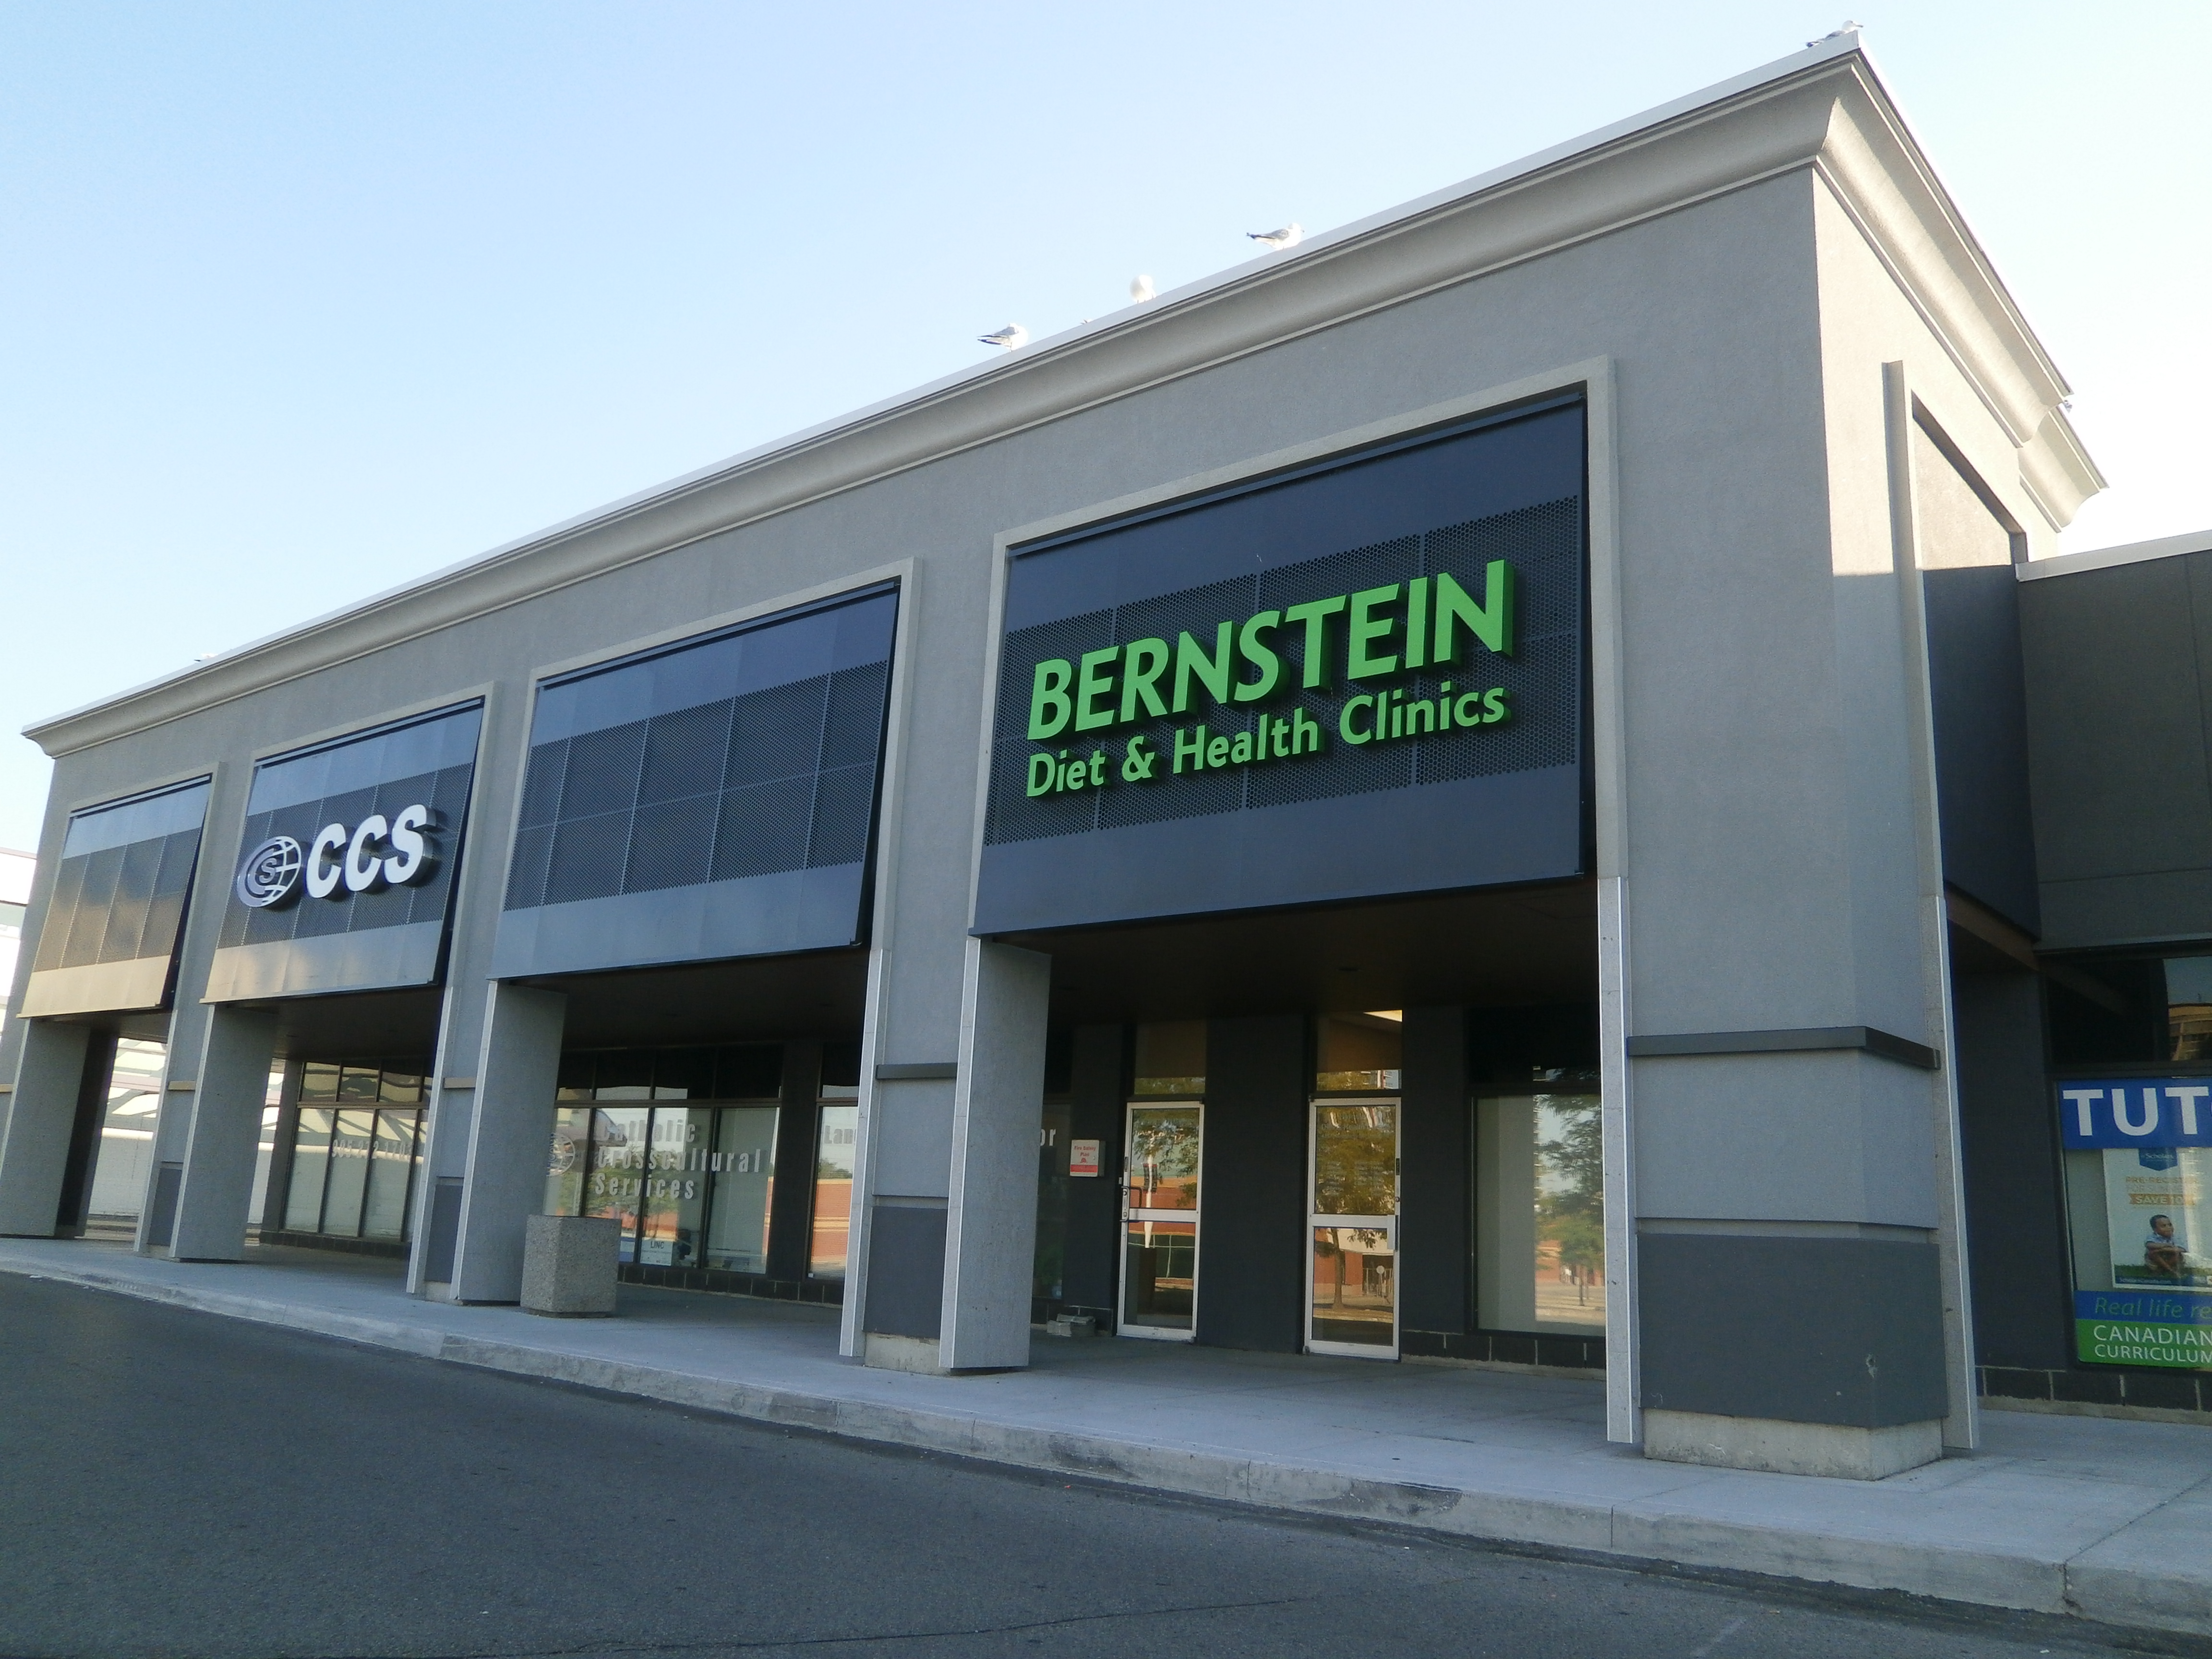 Dr. Bernstein Weight Loss & Diet Clinic, Mississauga, Ontario